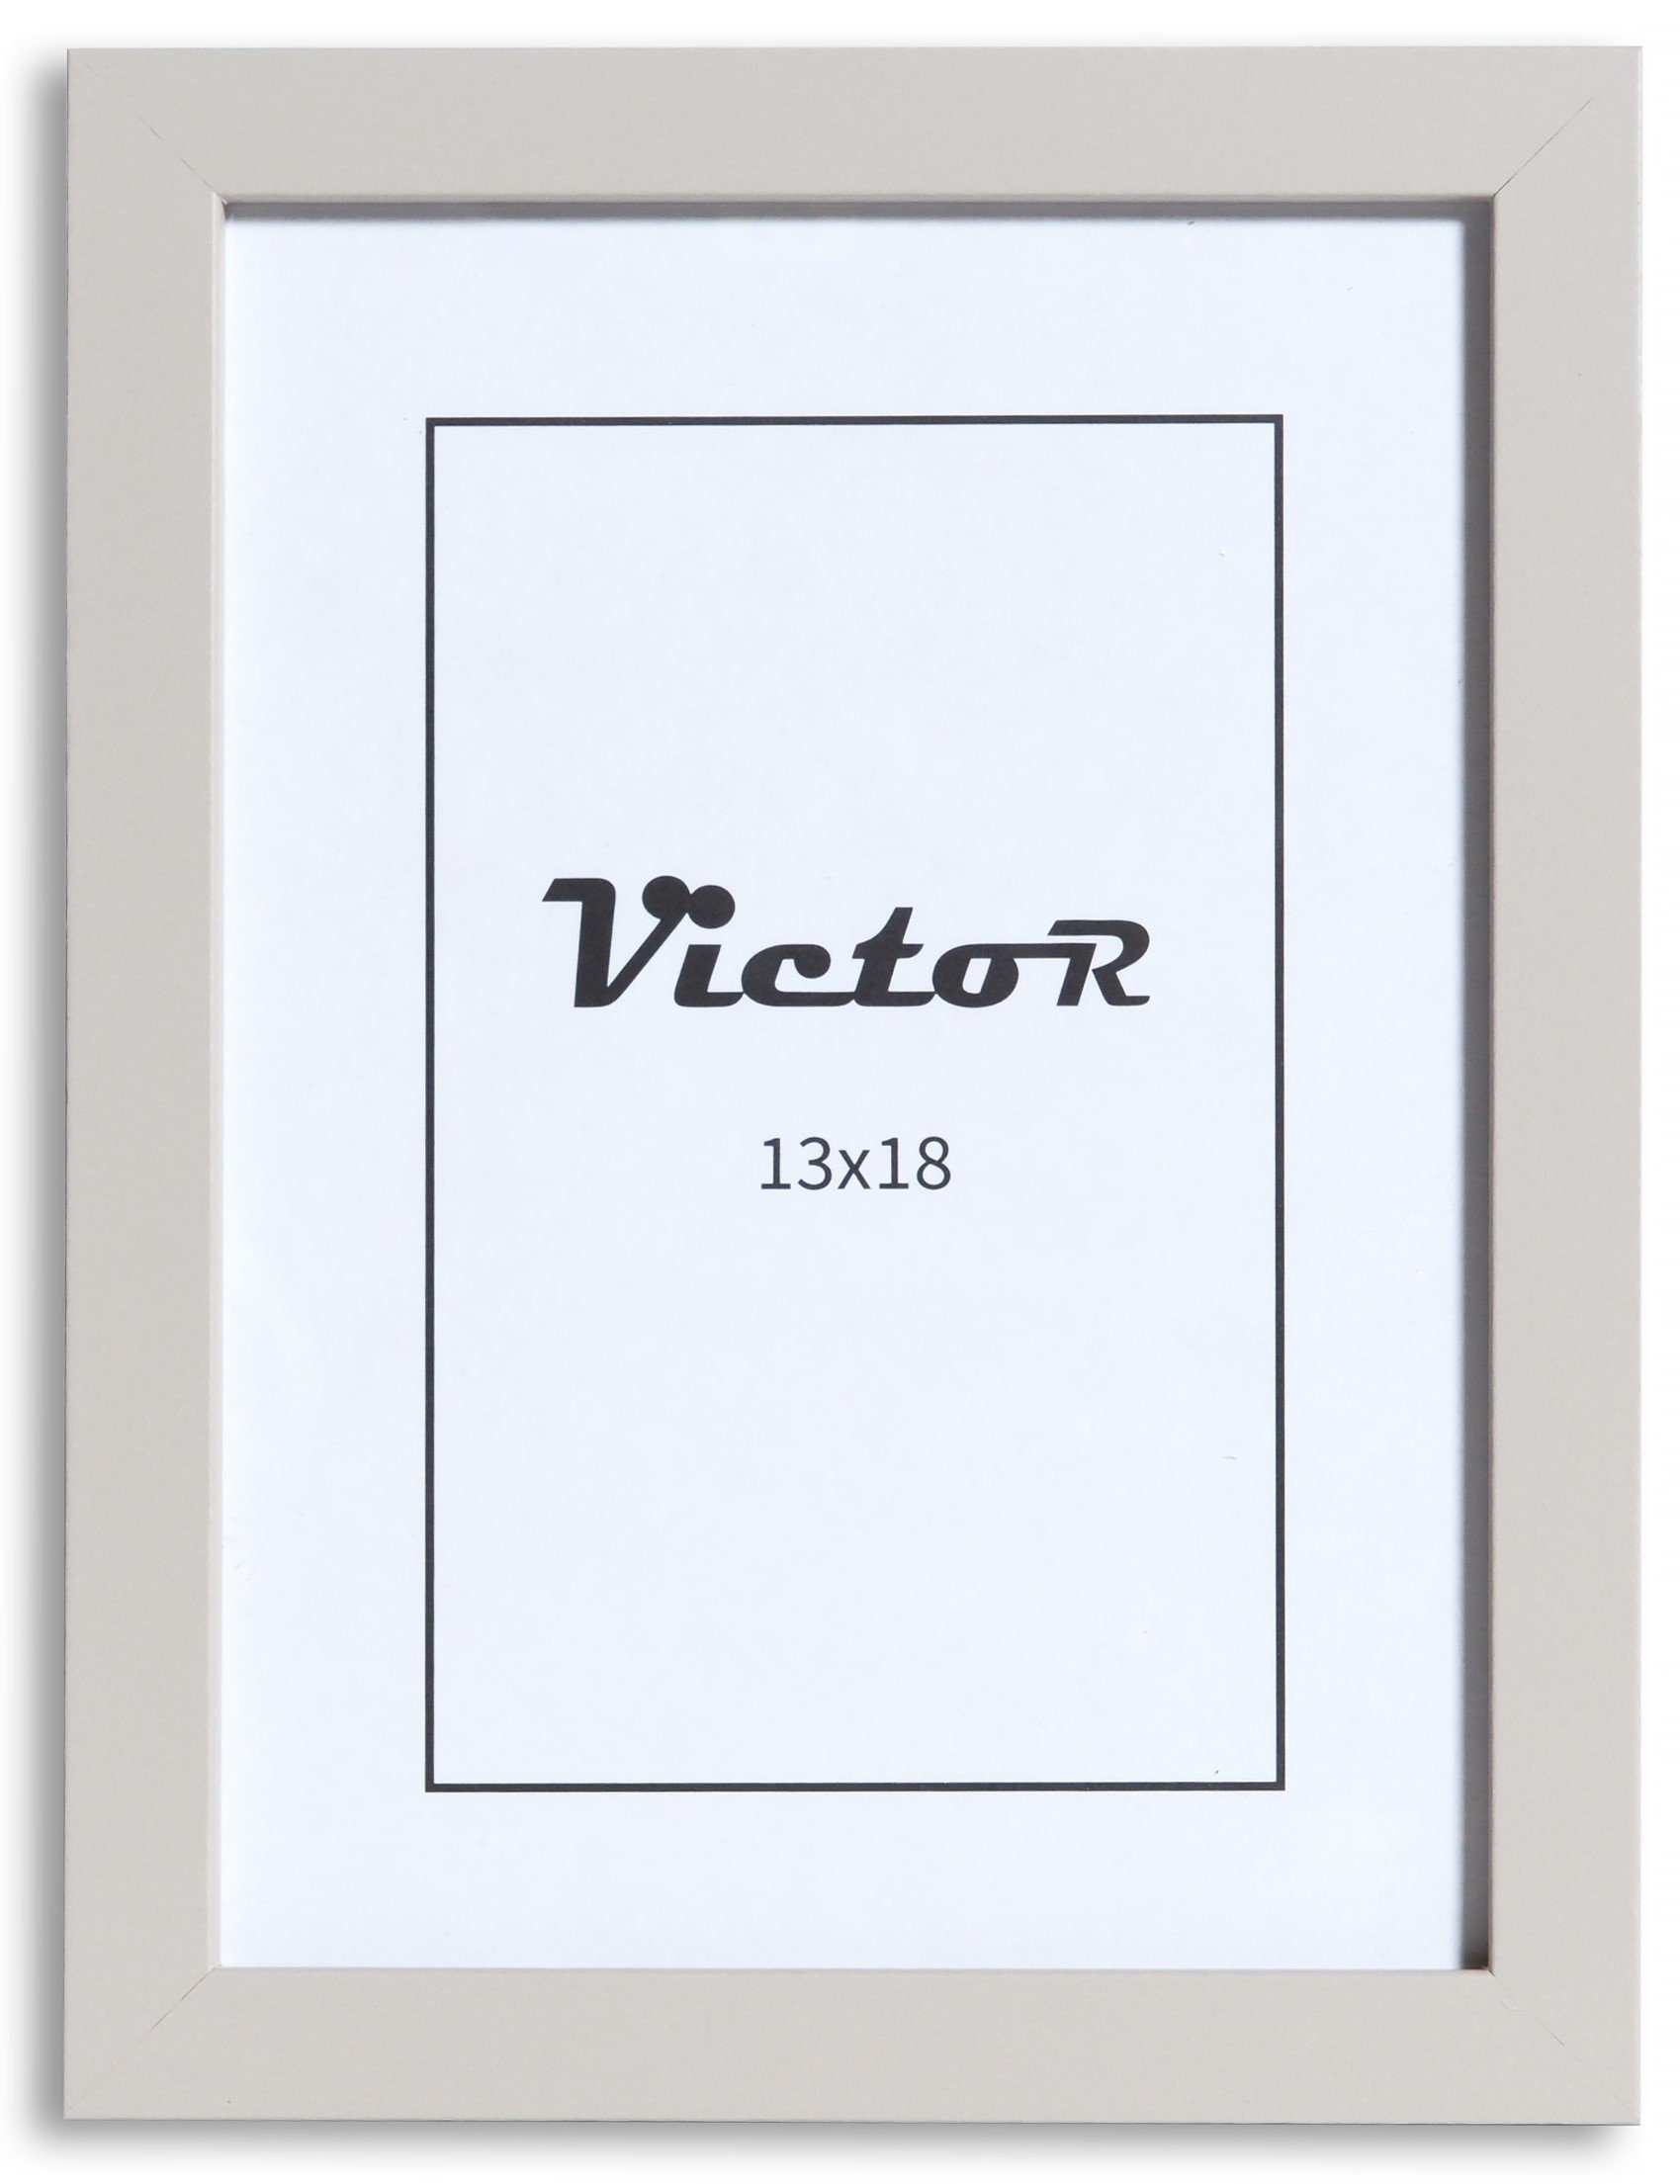 Victor (Zenith) Bilderrahmen Bilderrahmen "Klee" - Farbe: Grau - Größe: 13 x 18 cm, Bilderrahmen Grau 13x18 cm, Bilderrahmen Modern